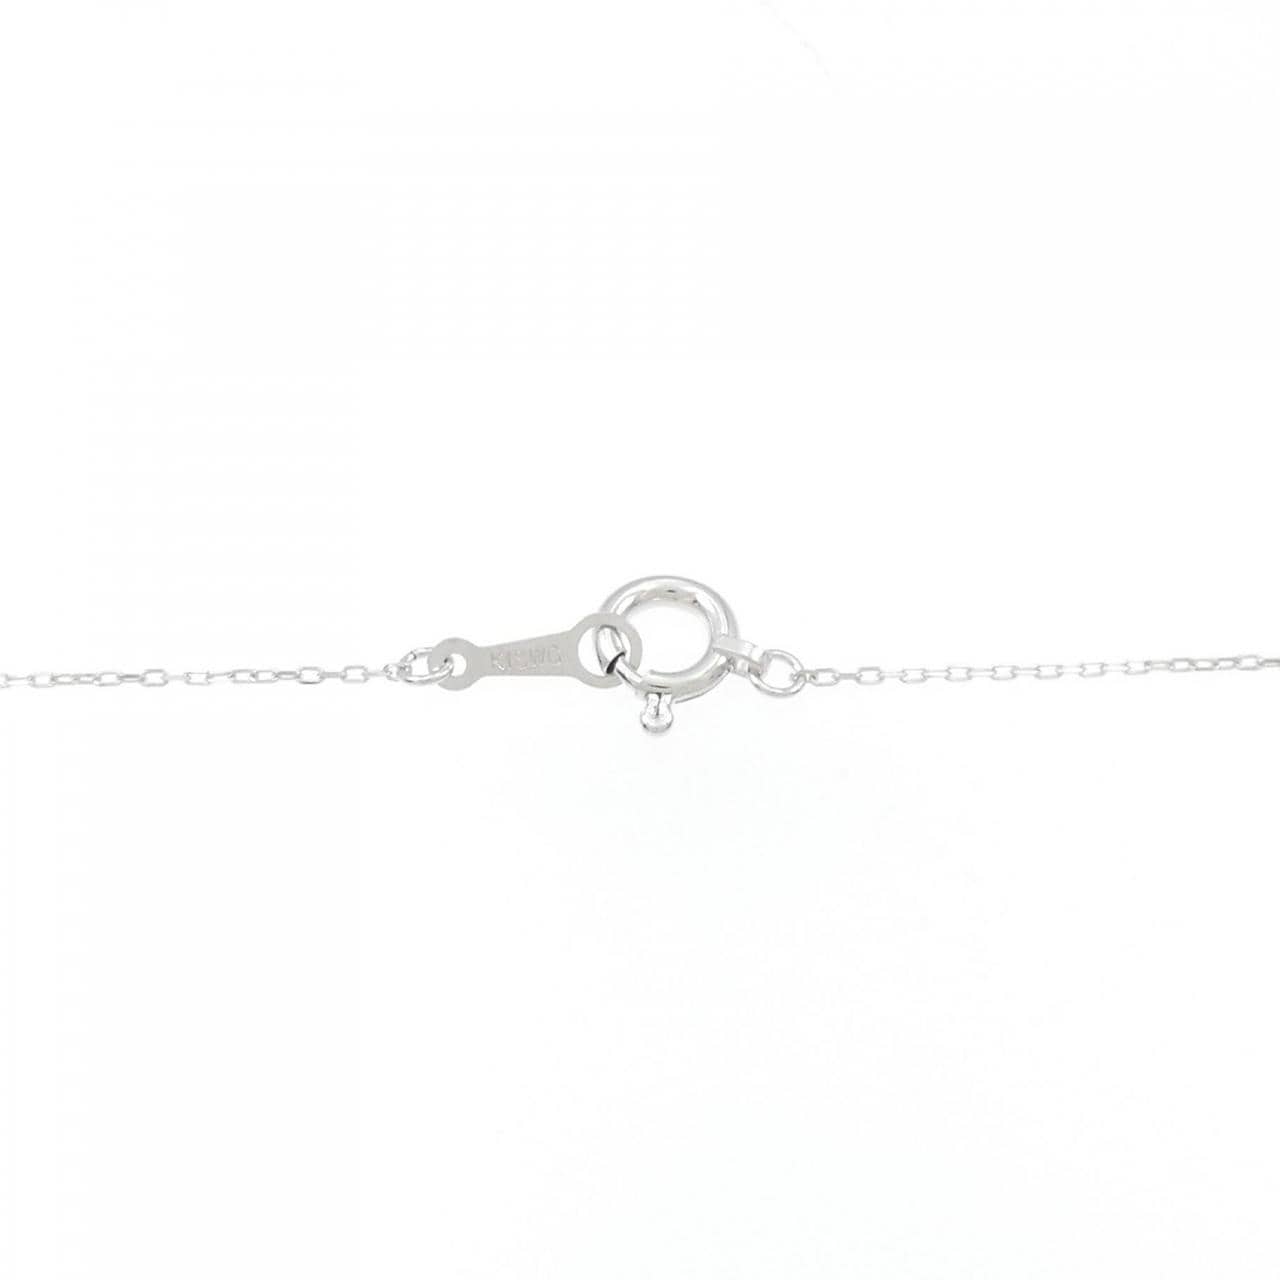 [BRAND NEW] K18WG Diamond necklace 0.10CT